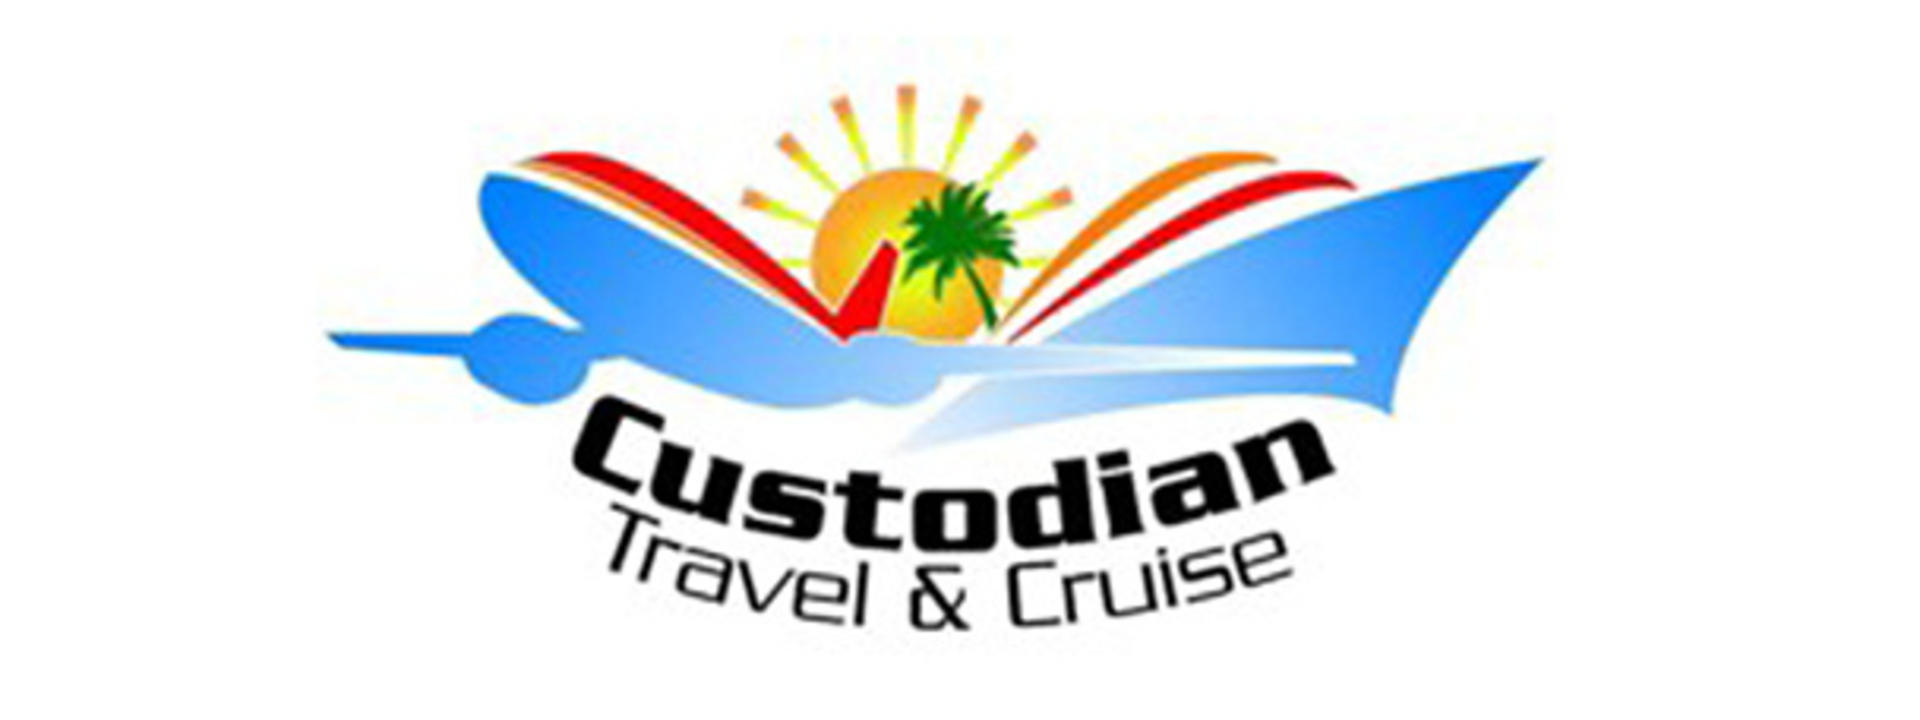 Logo: Custodian Travel & Cruise